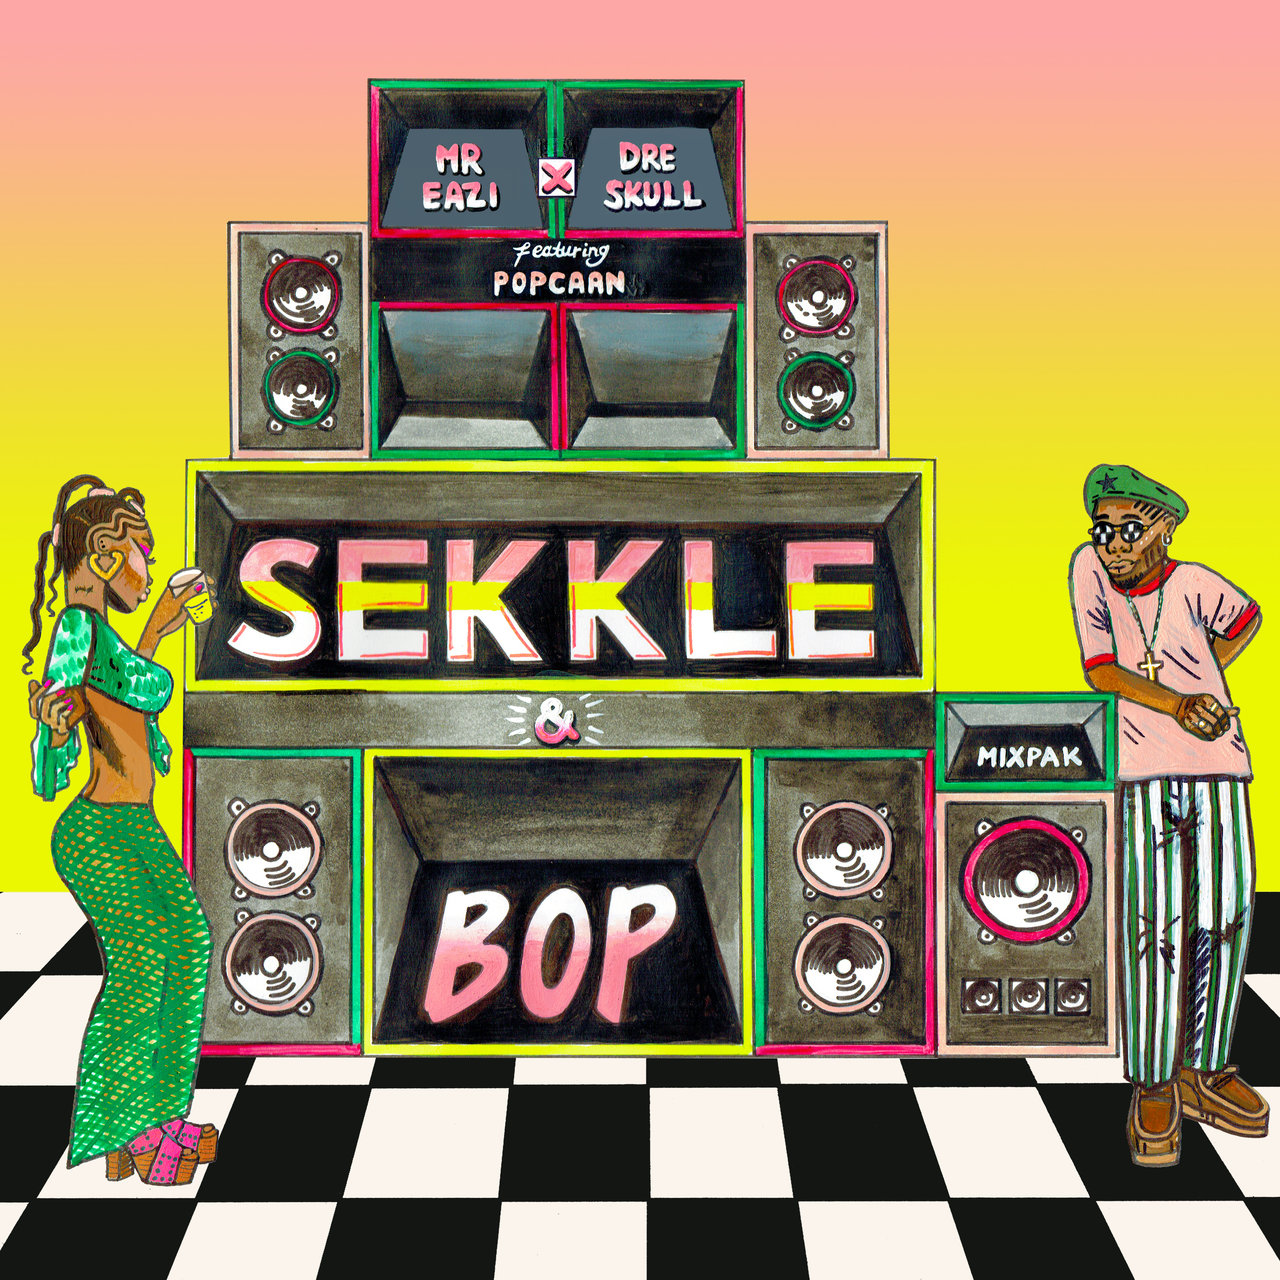 Mr Eazi and Dre Skull - Sekkle and Bop (ft. Popcaan) (Cover)